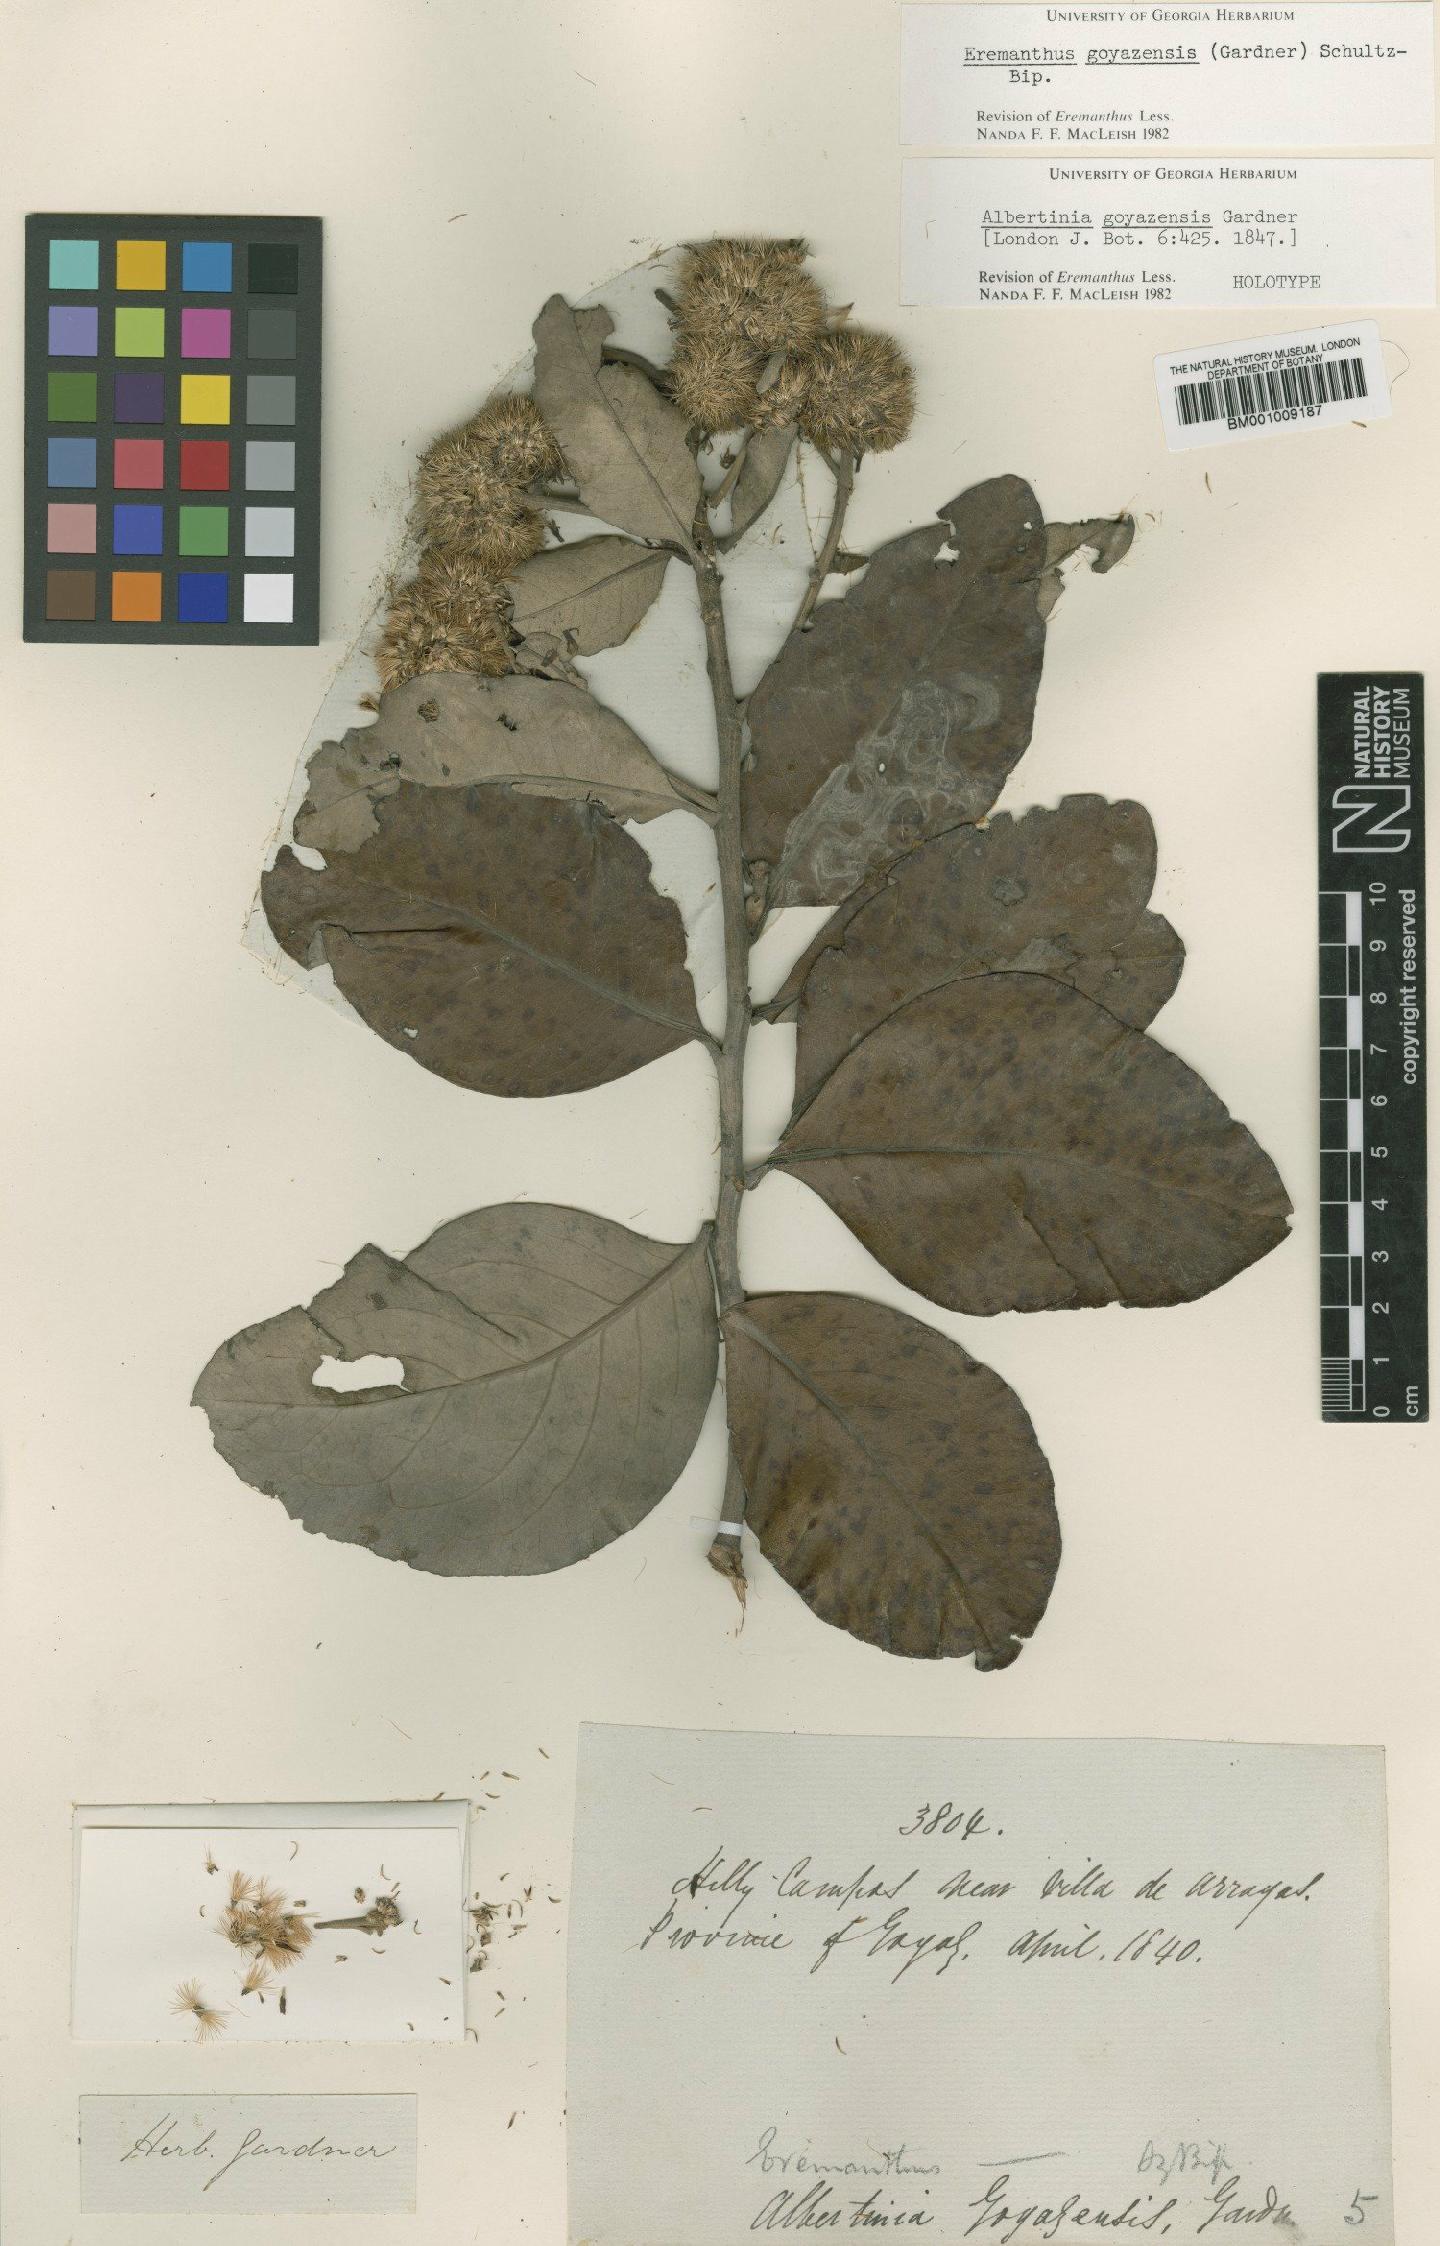 To NHMUK collection (Eremanthus goyazensis (Gardner) Sch.Bip.; Holotype; NHMUK:ecatalogue:557182)